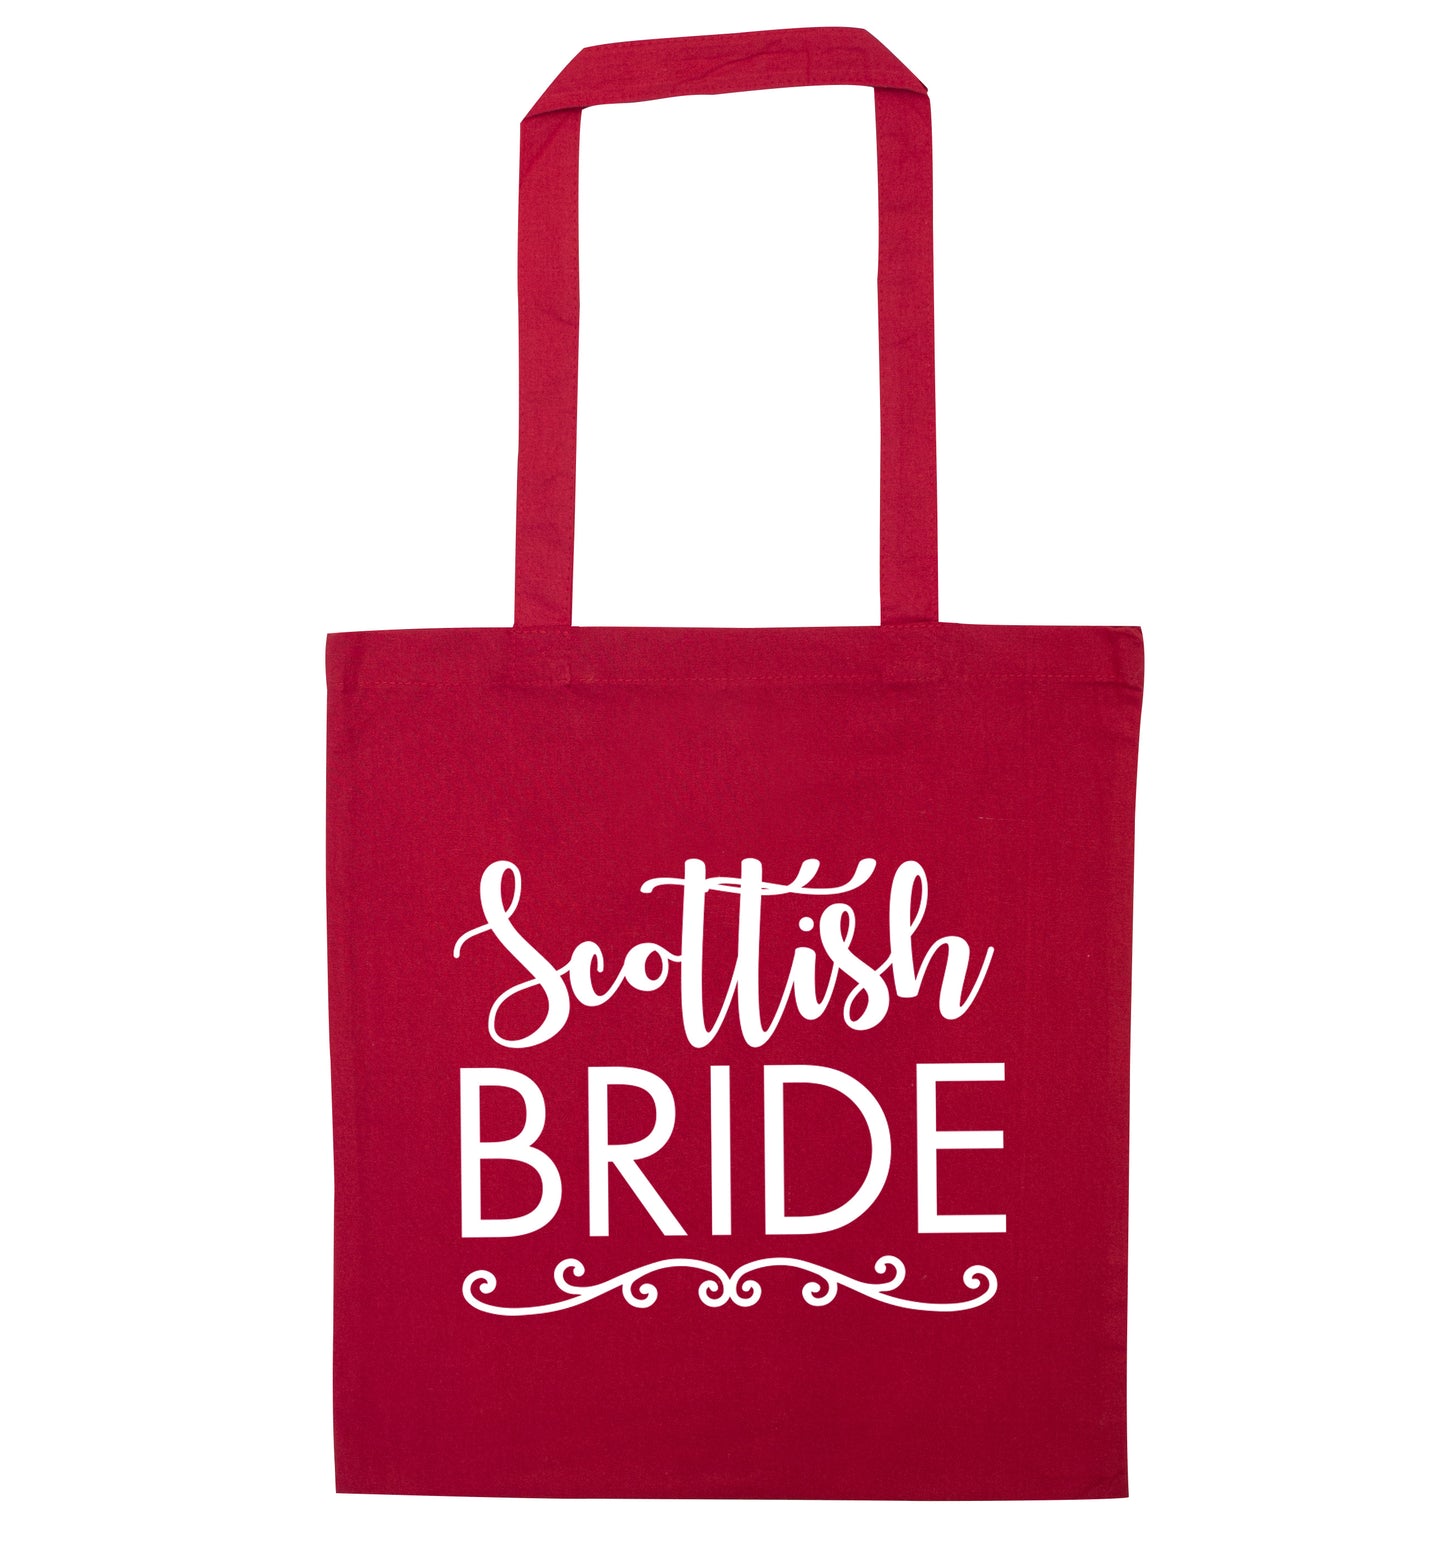 Scottish Bride red tote bag